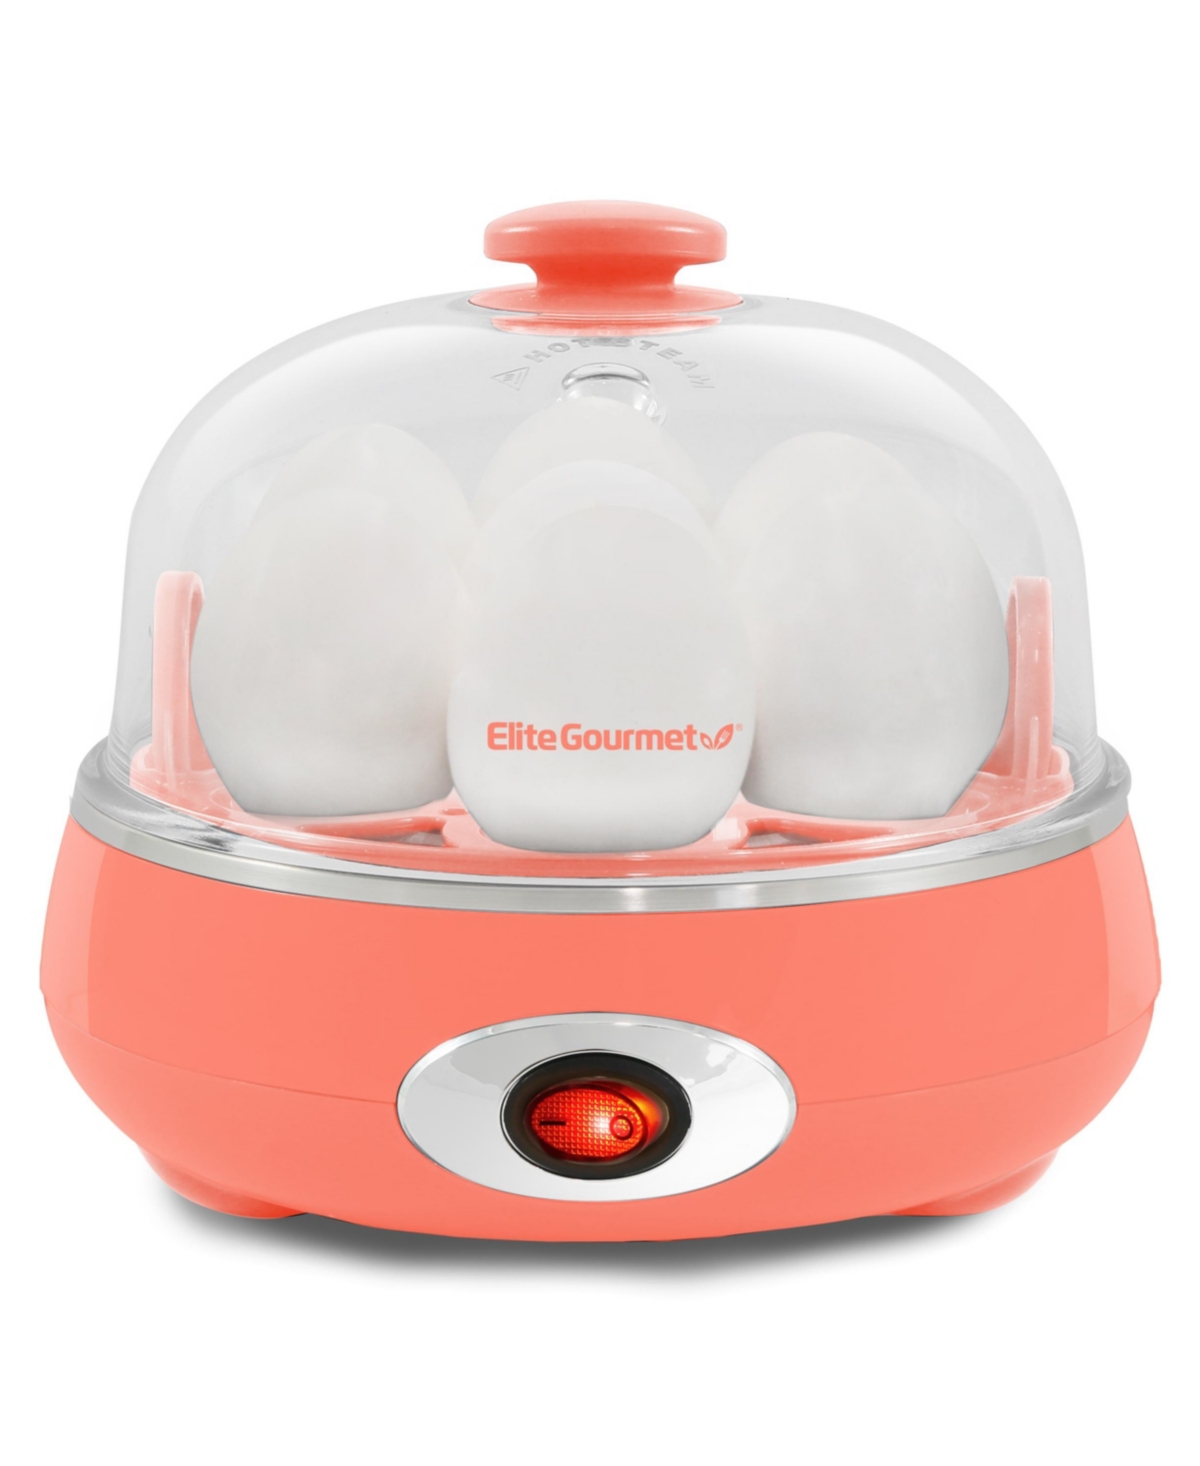 Elite Gourmet Easy Electric 7 Egg Capacity Cooker, Poacher, Steamer, Omelet Maker With Auto Shut-off In Orange